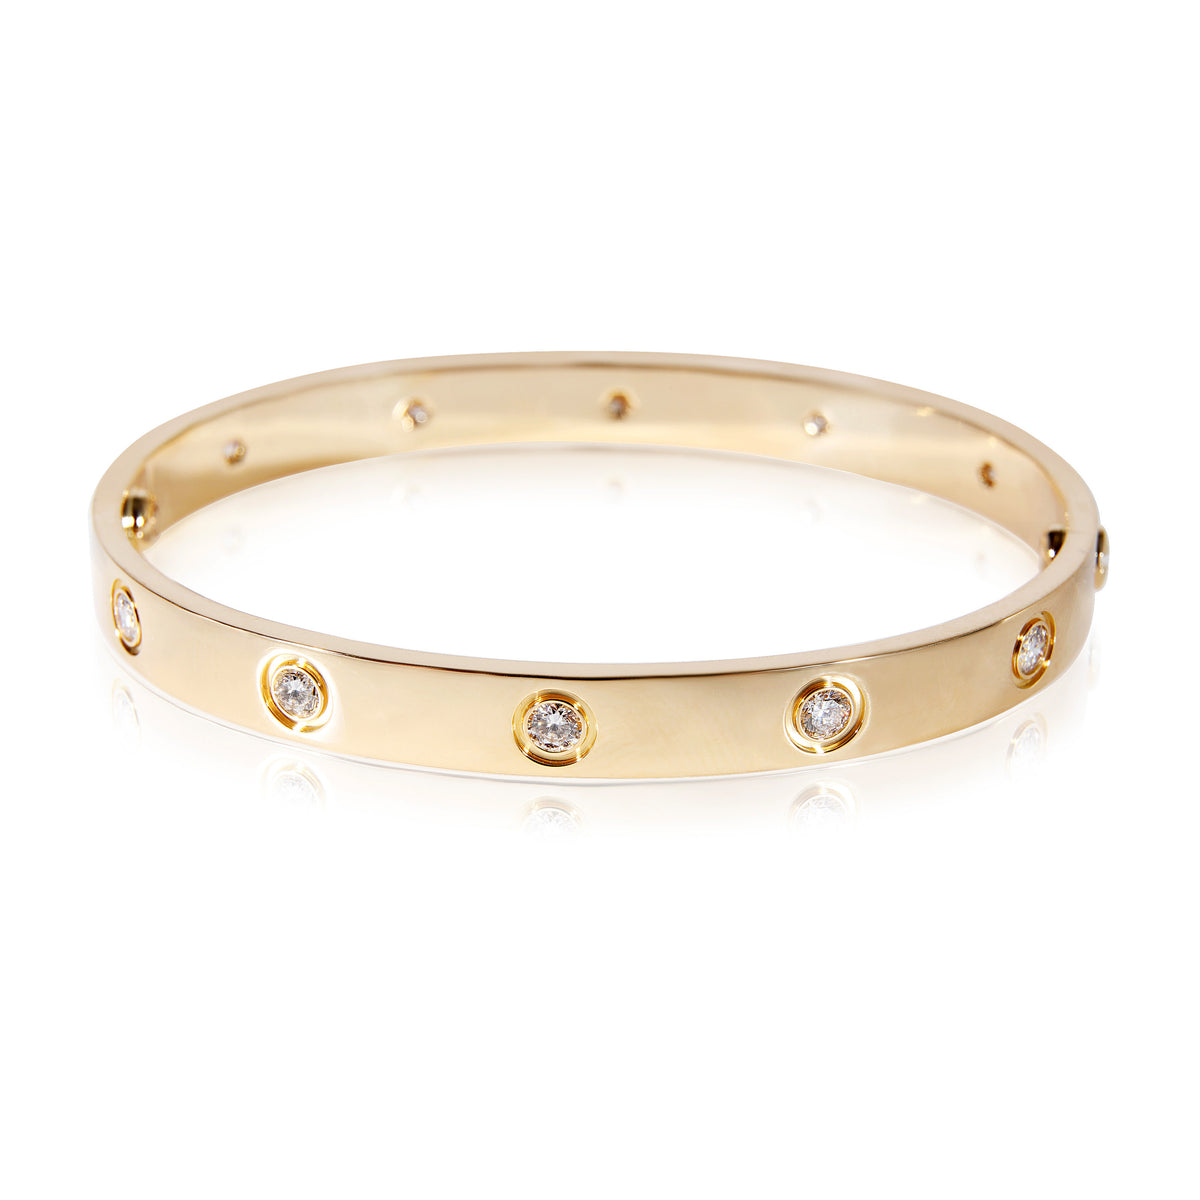 Cartier Love Bracelet with Diamonds in 18K Yellow Gold 0.96 CTW